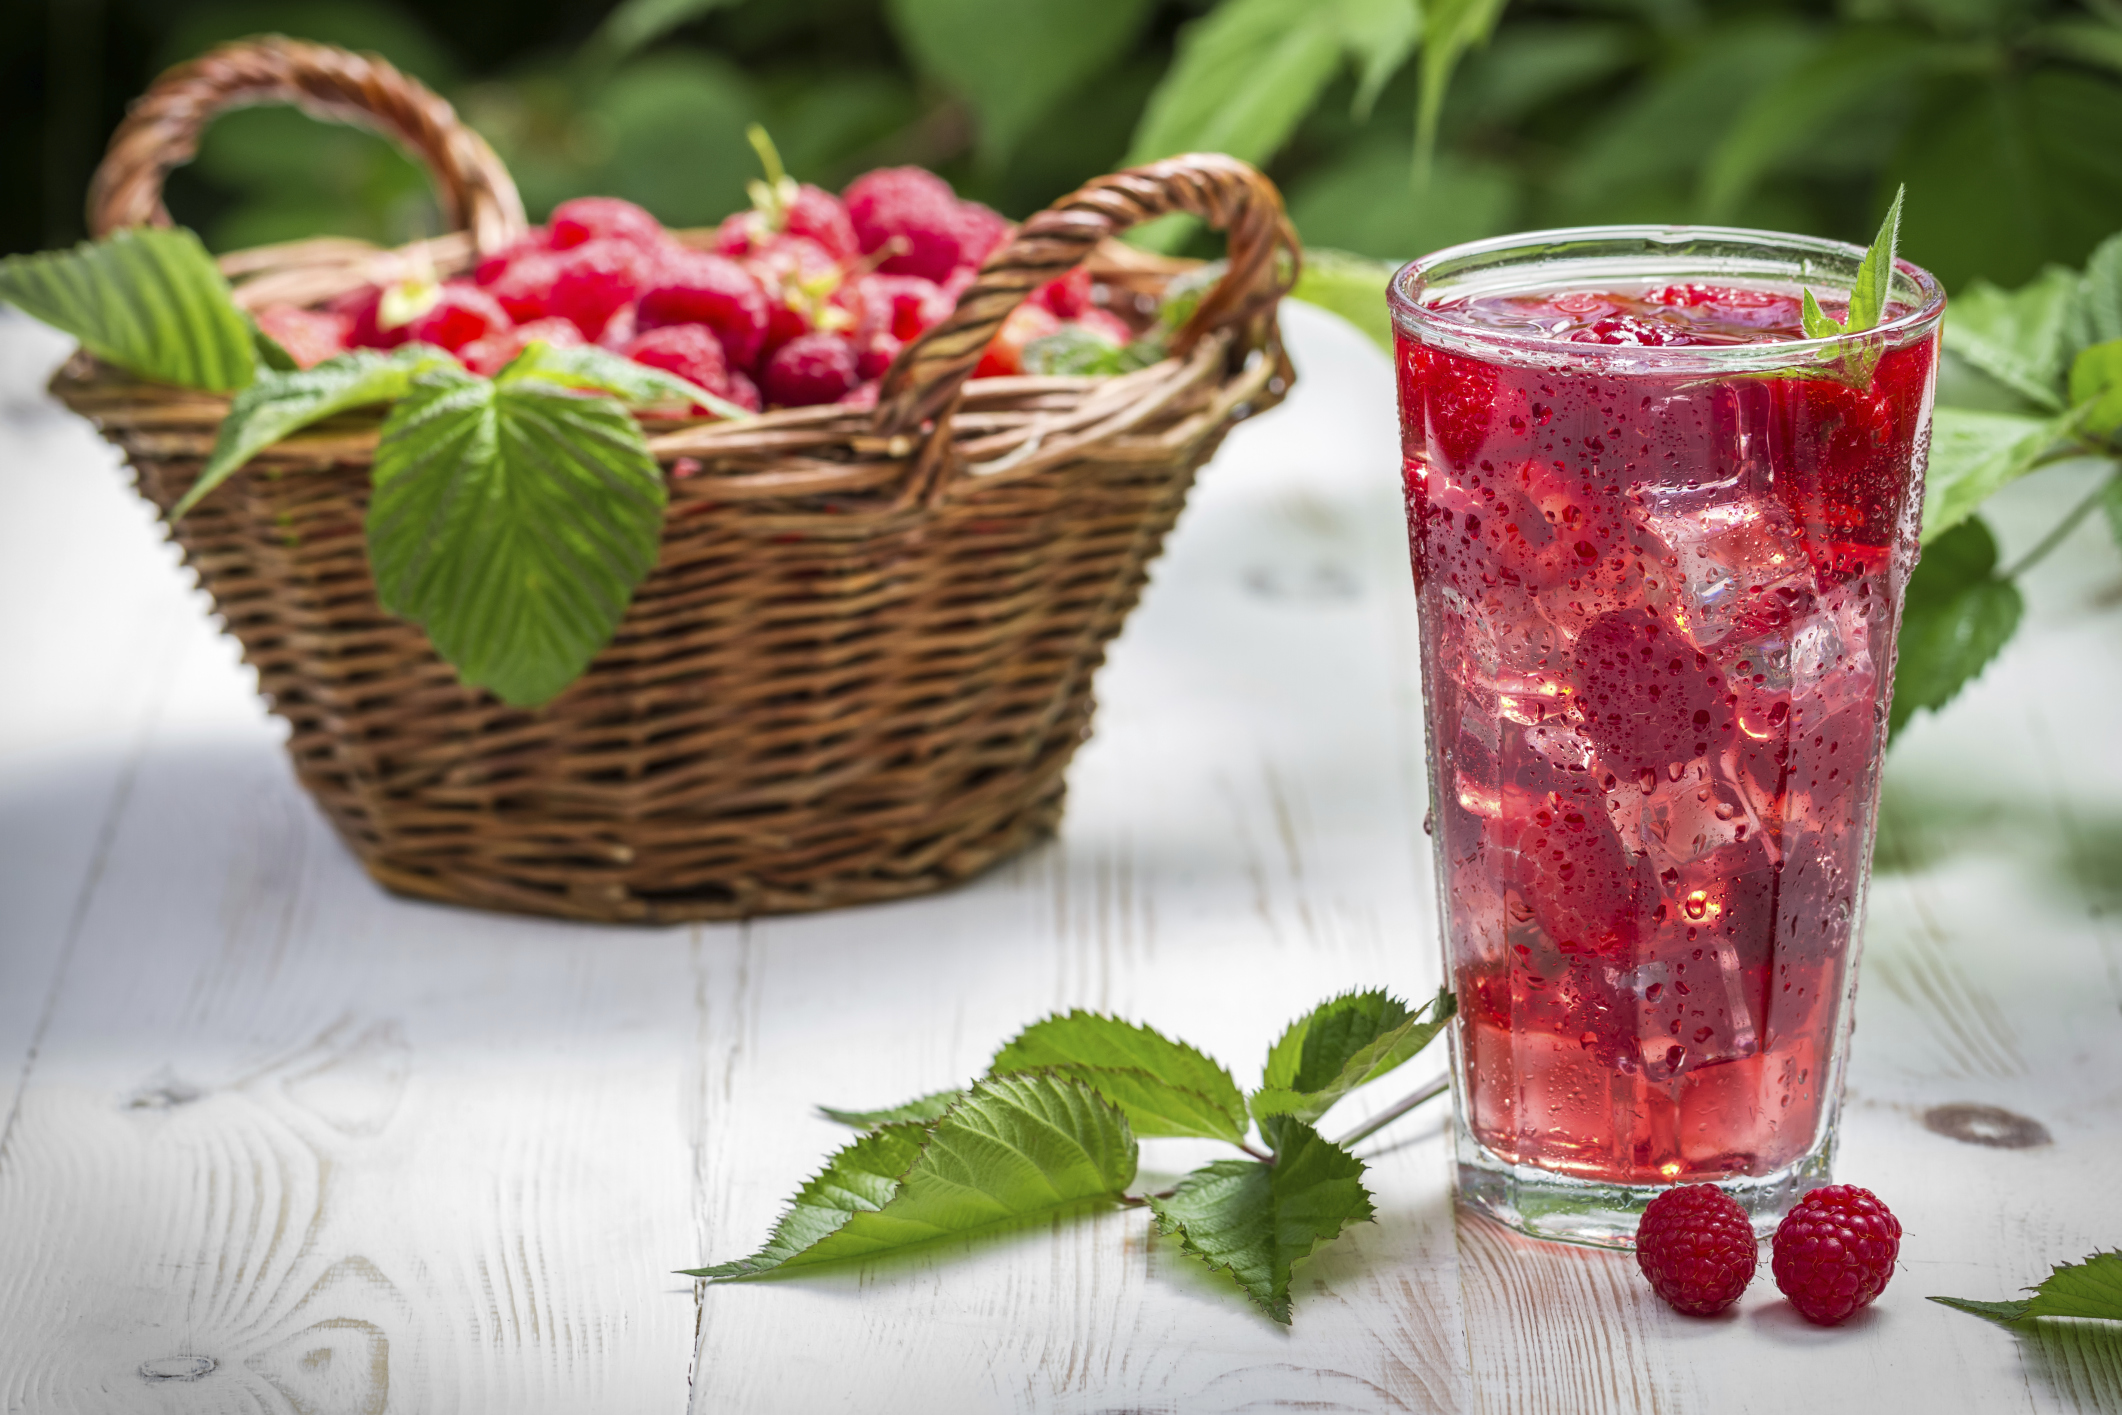 Benefits of Raspberry Juice | LIVESTRONG.COM